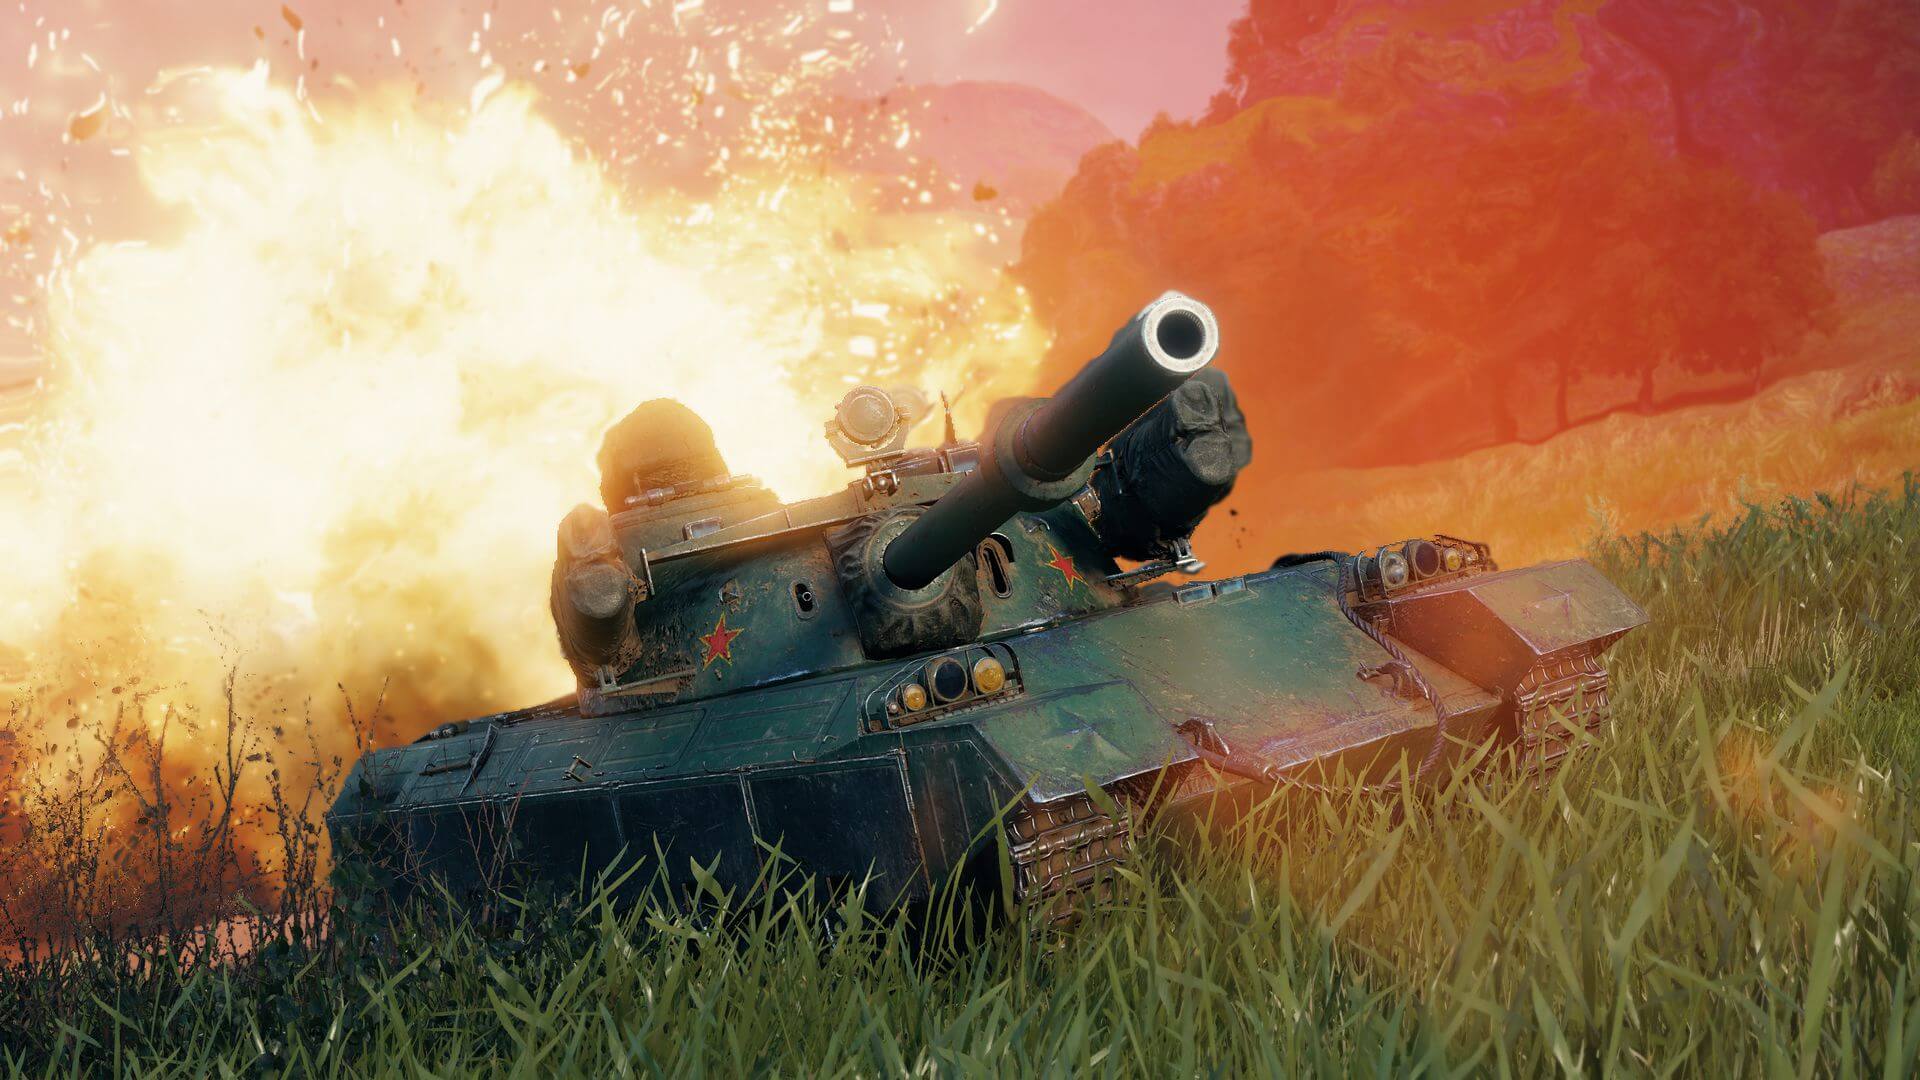 World of Tanks "bullish": Wargaming launches "Moon Hunt" for premium tank 122 TM